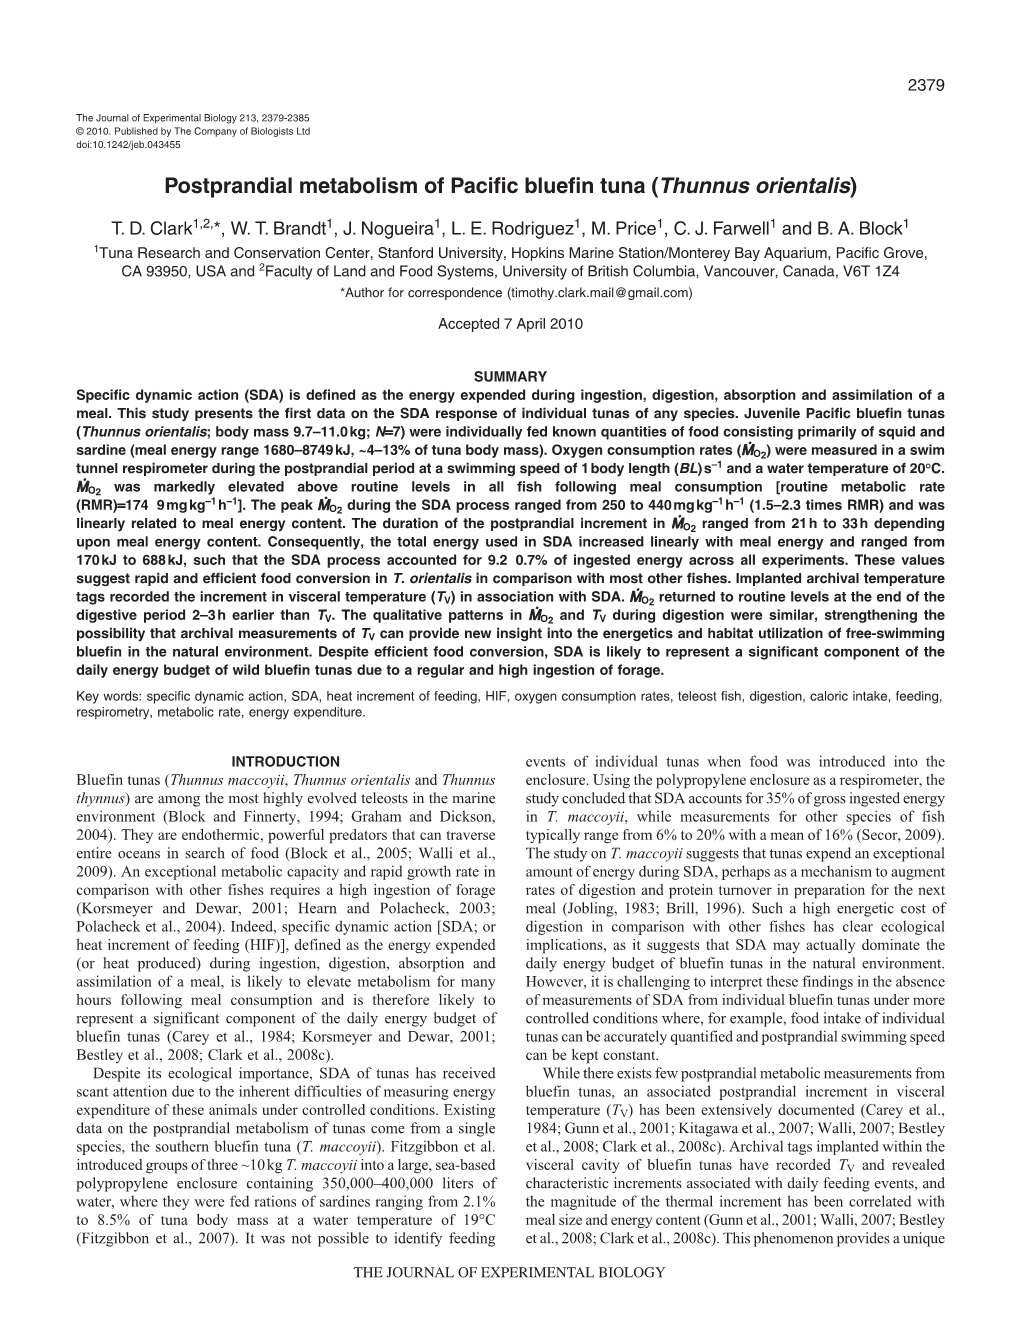 Postprandial Metabolism of Pacific Bluefin Tuna (Thunnus Orientalis)